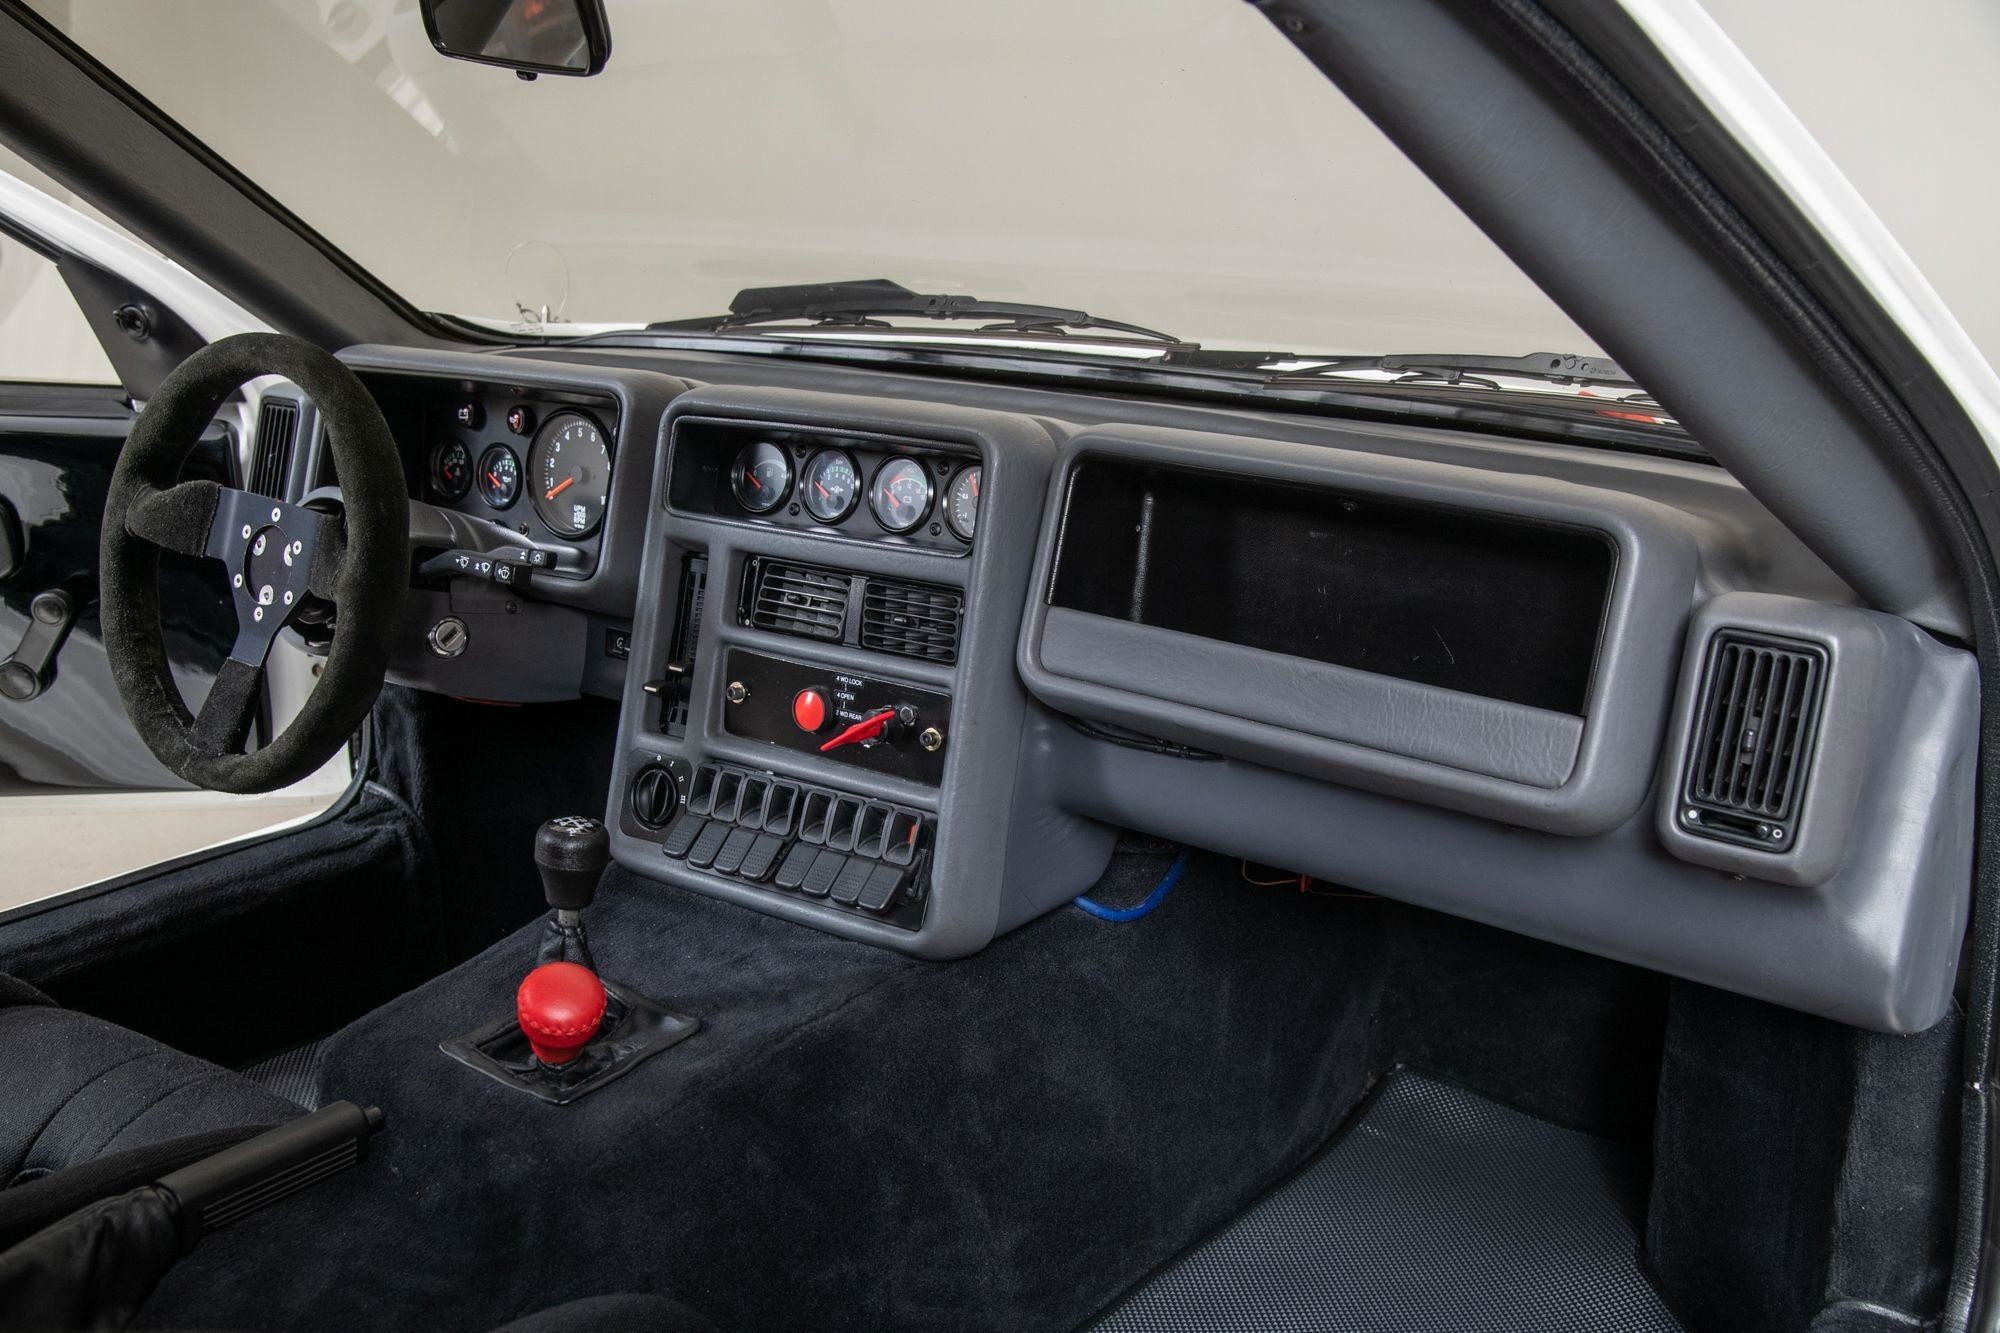 Ультра-редкий гоночный Ford RS200 Evolution из 1980-х